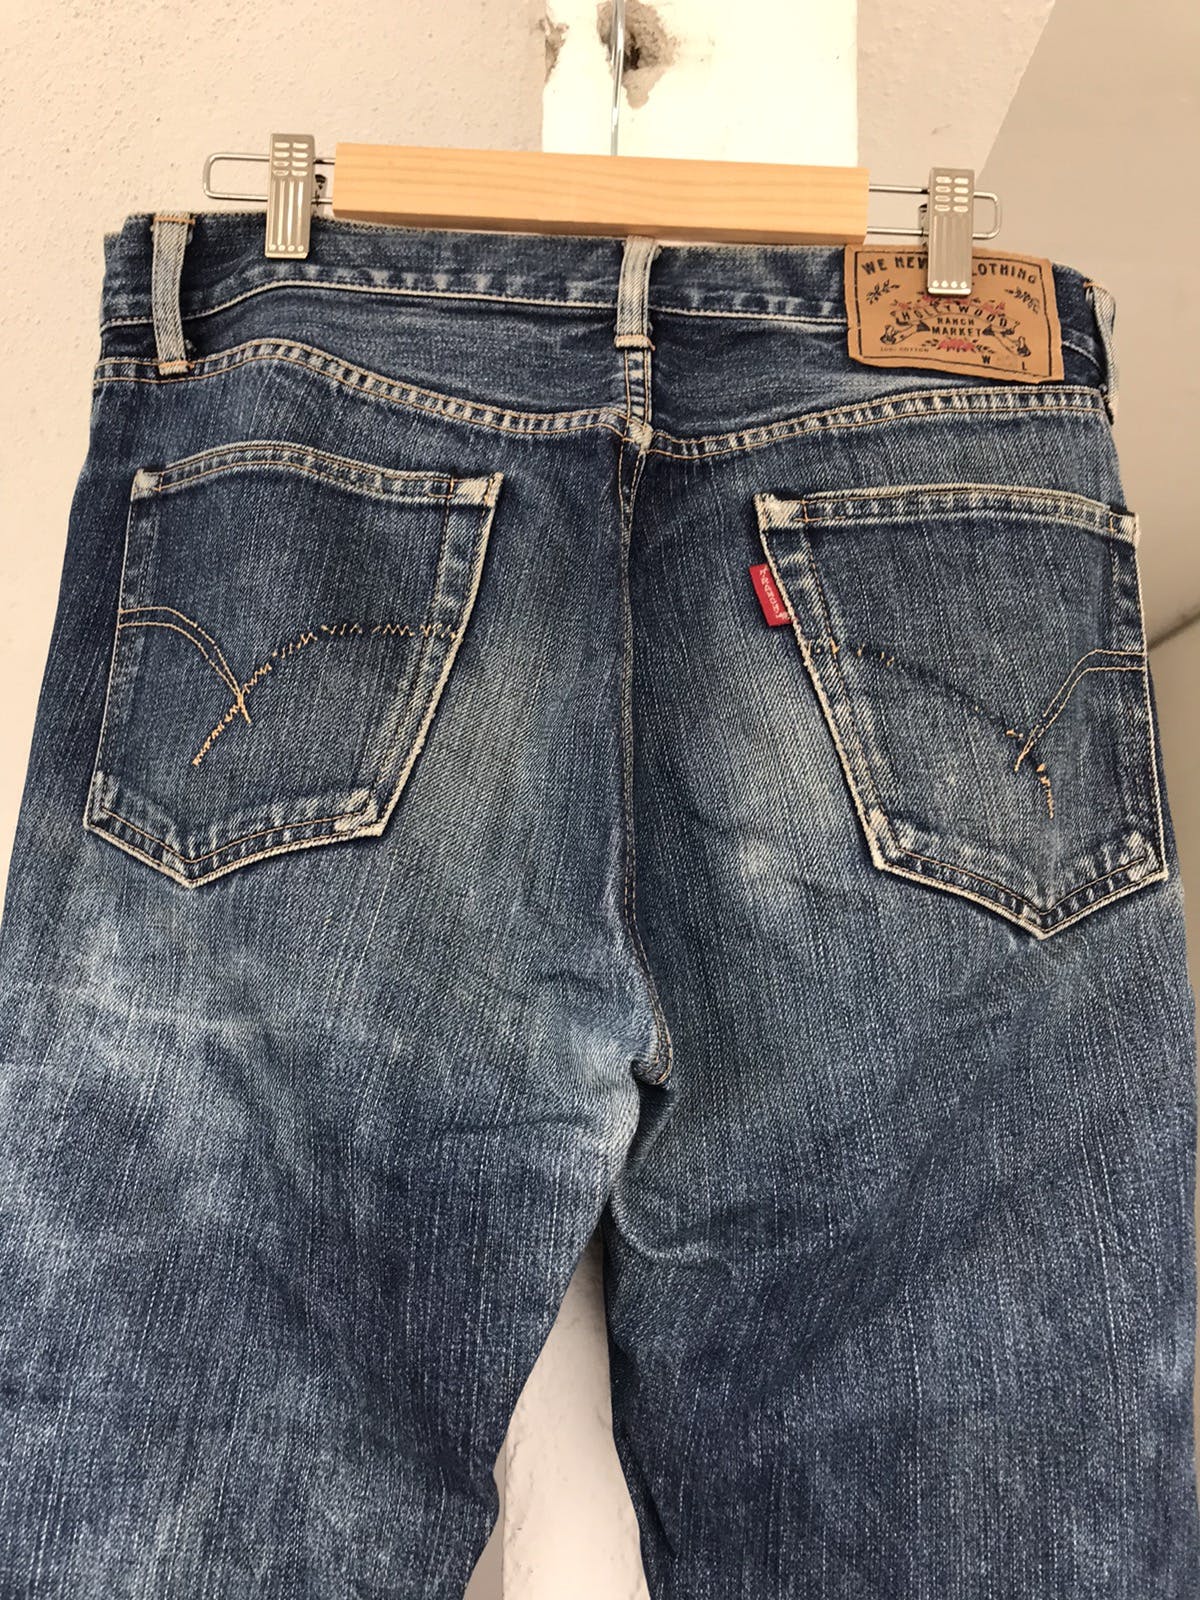 90s Hollywood Ranch Marrket Denim Jeans - 10